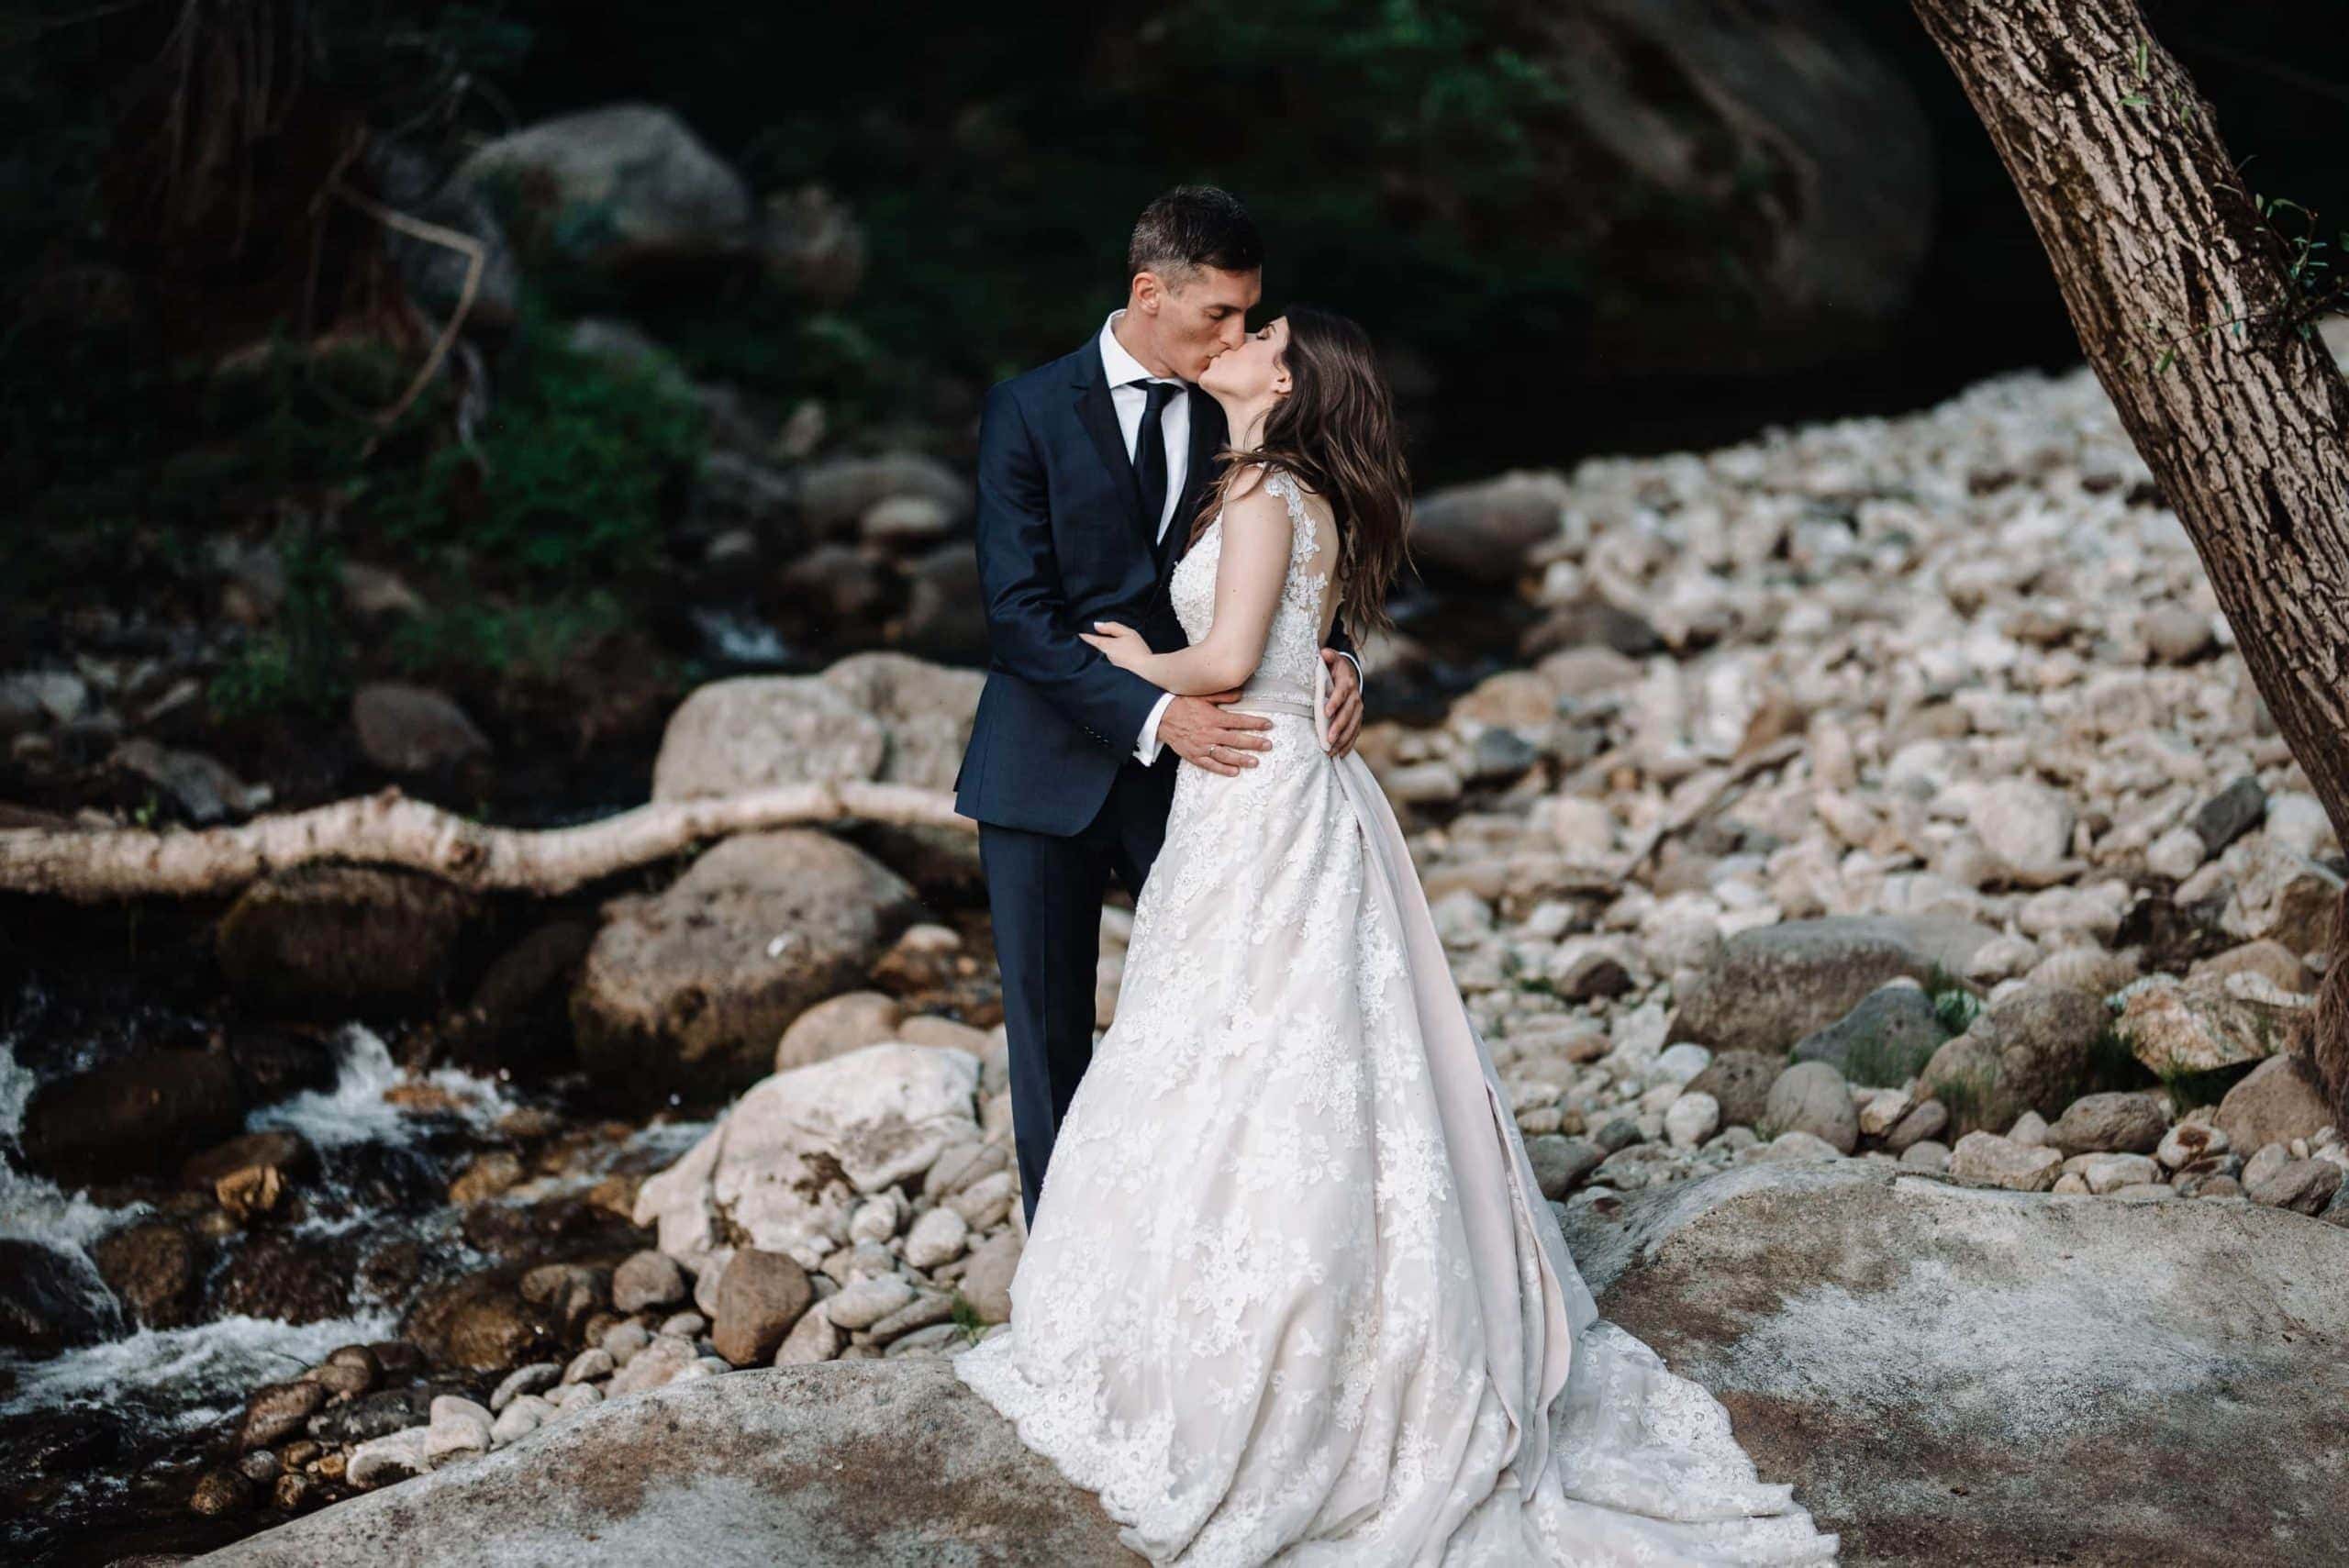 Vaggelis & Vaso - Wedding Photography - MoreThanClickPhotography